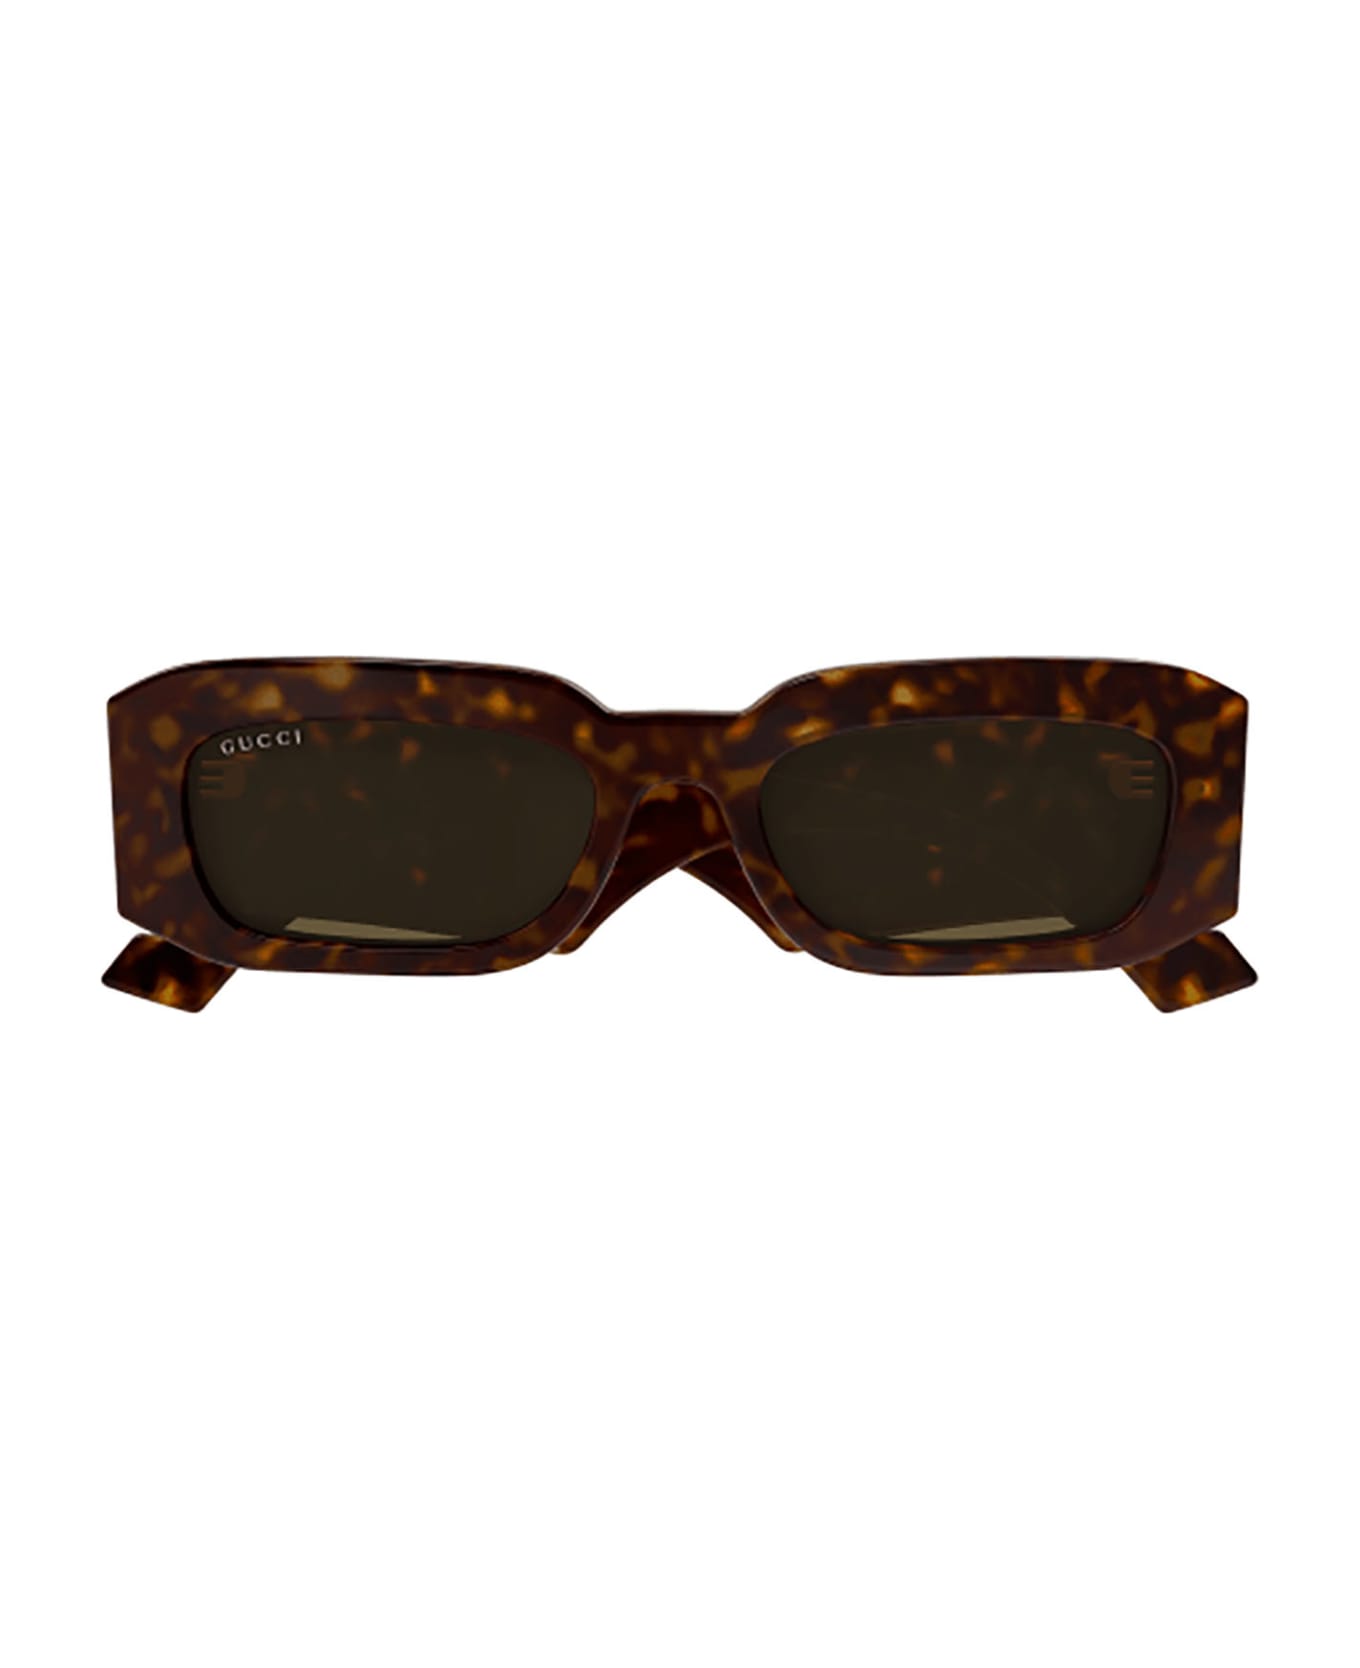 Gucci Eyewear Gg1426s Sunglasses - 002 havana havana brown